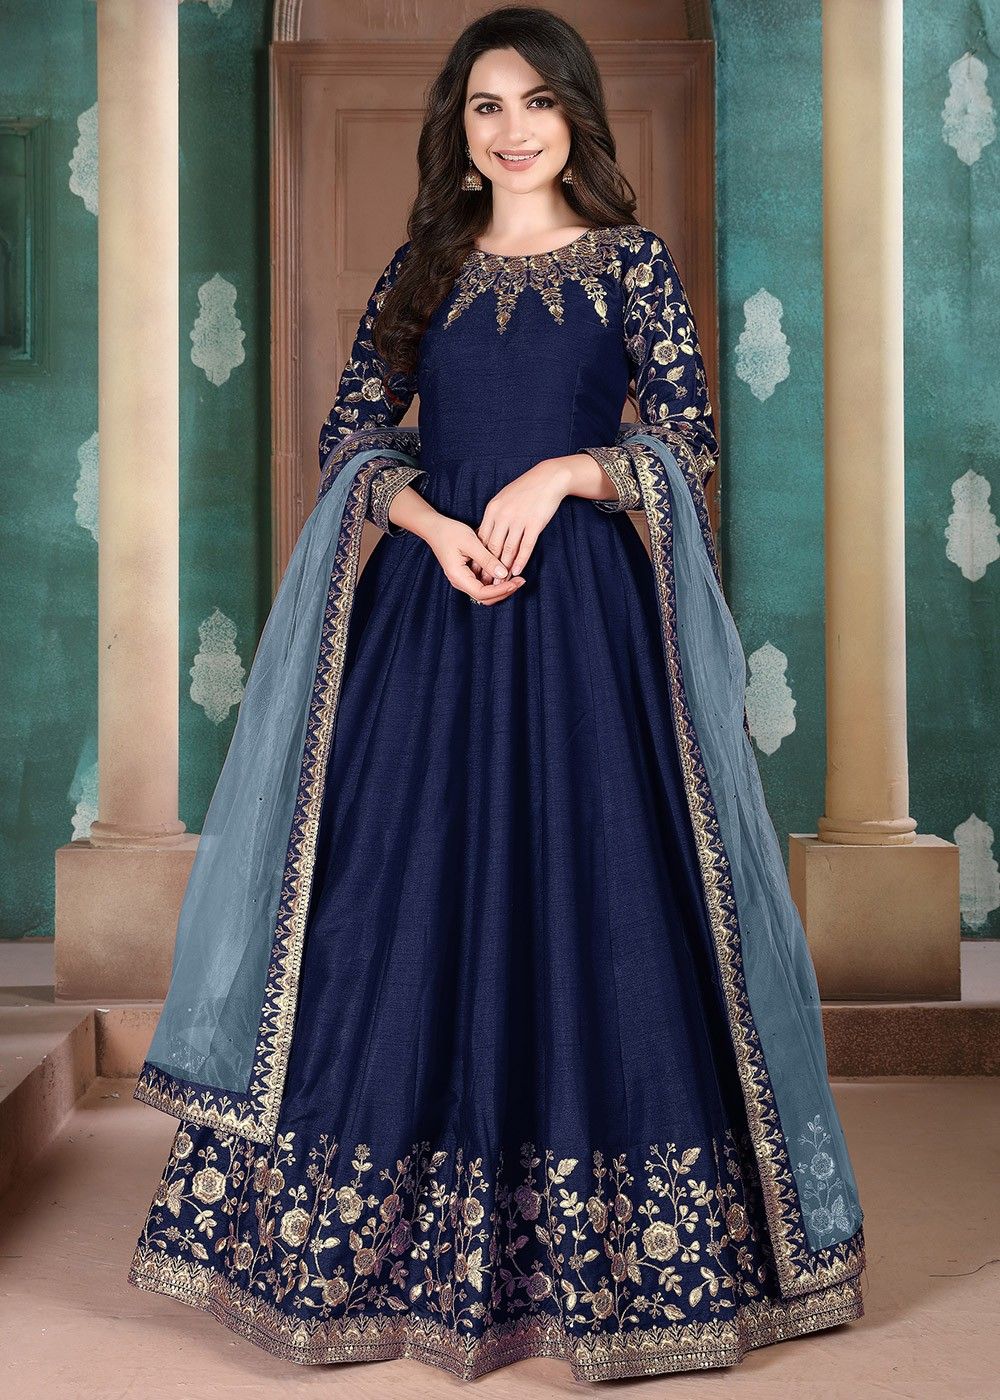 Details more than 82 blue silk anarkali gown best